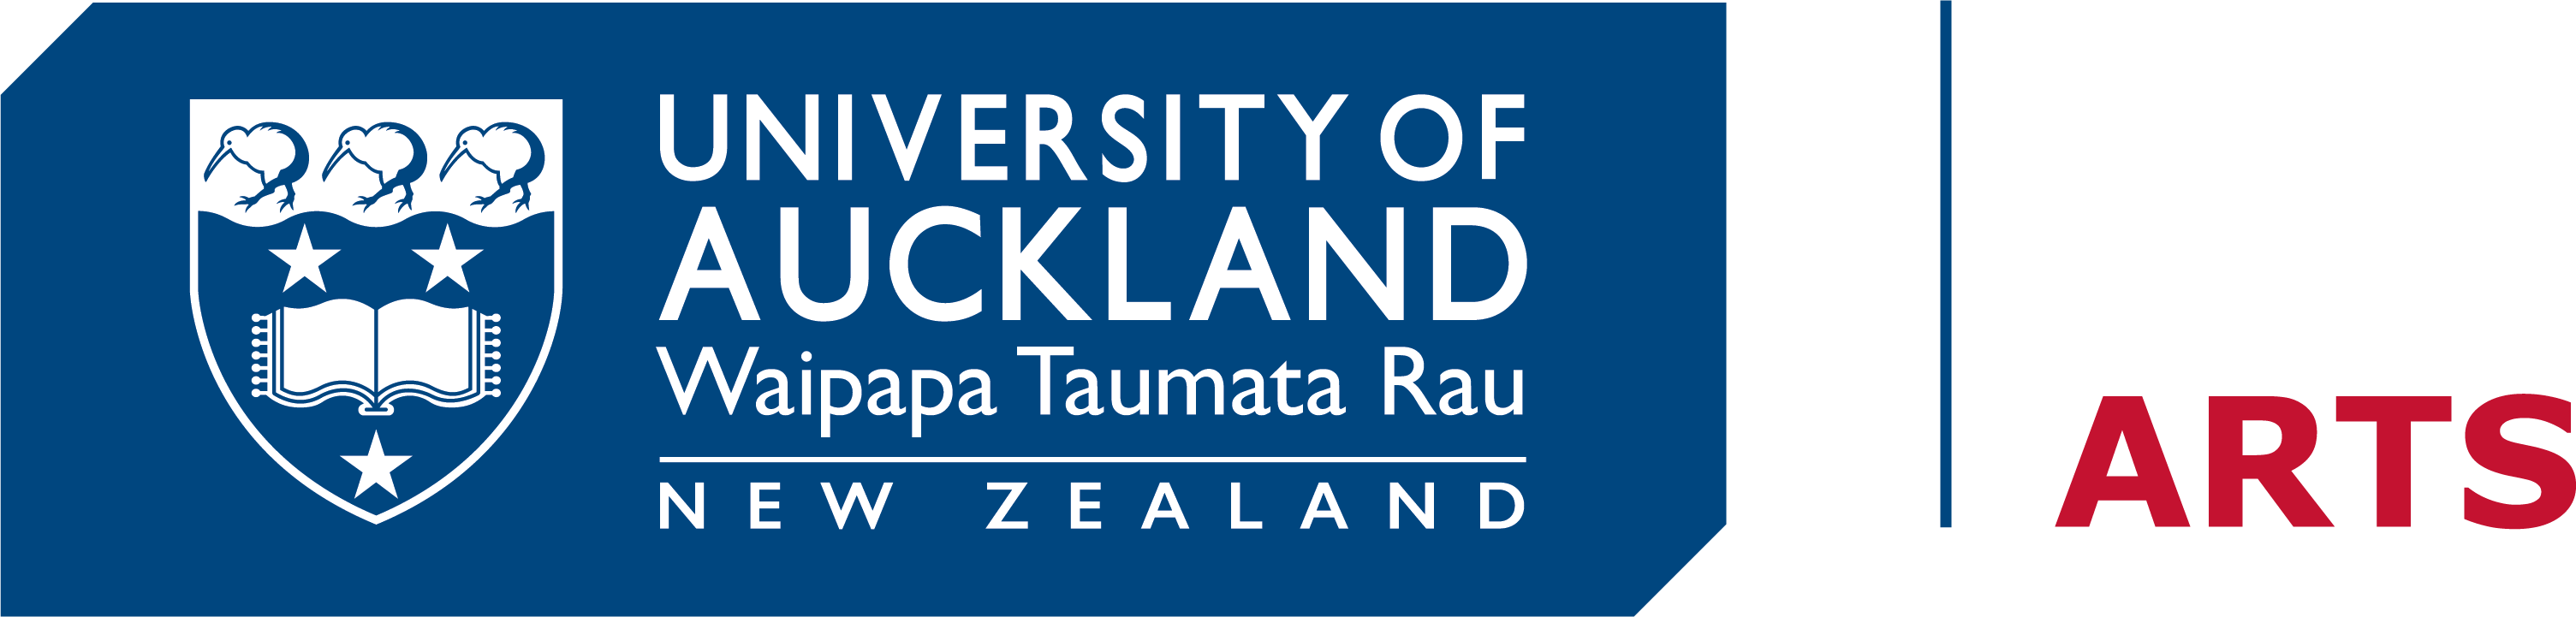 Faculty of Arts logo